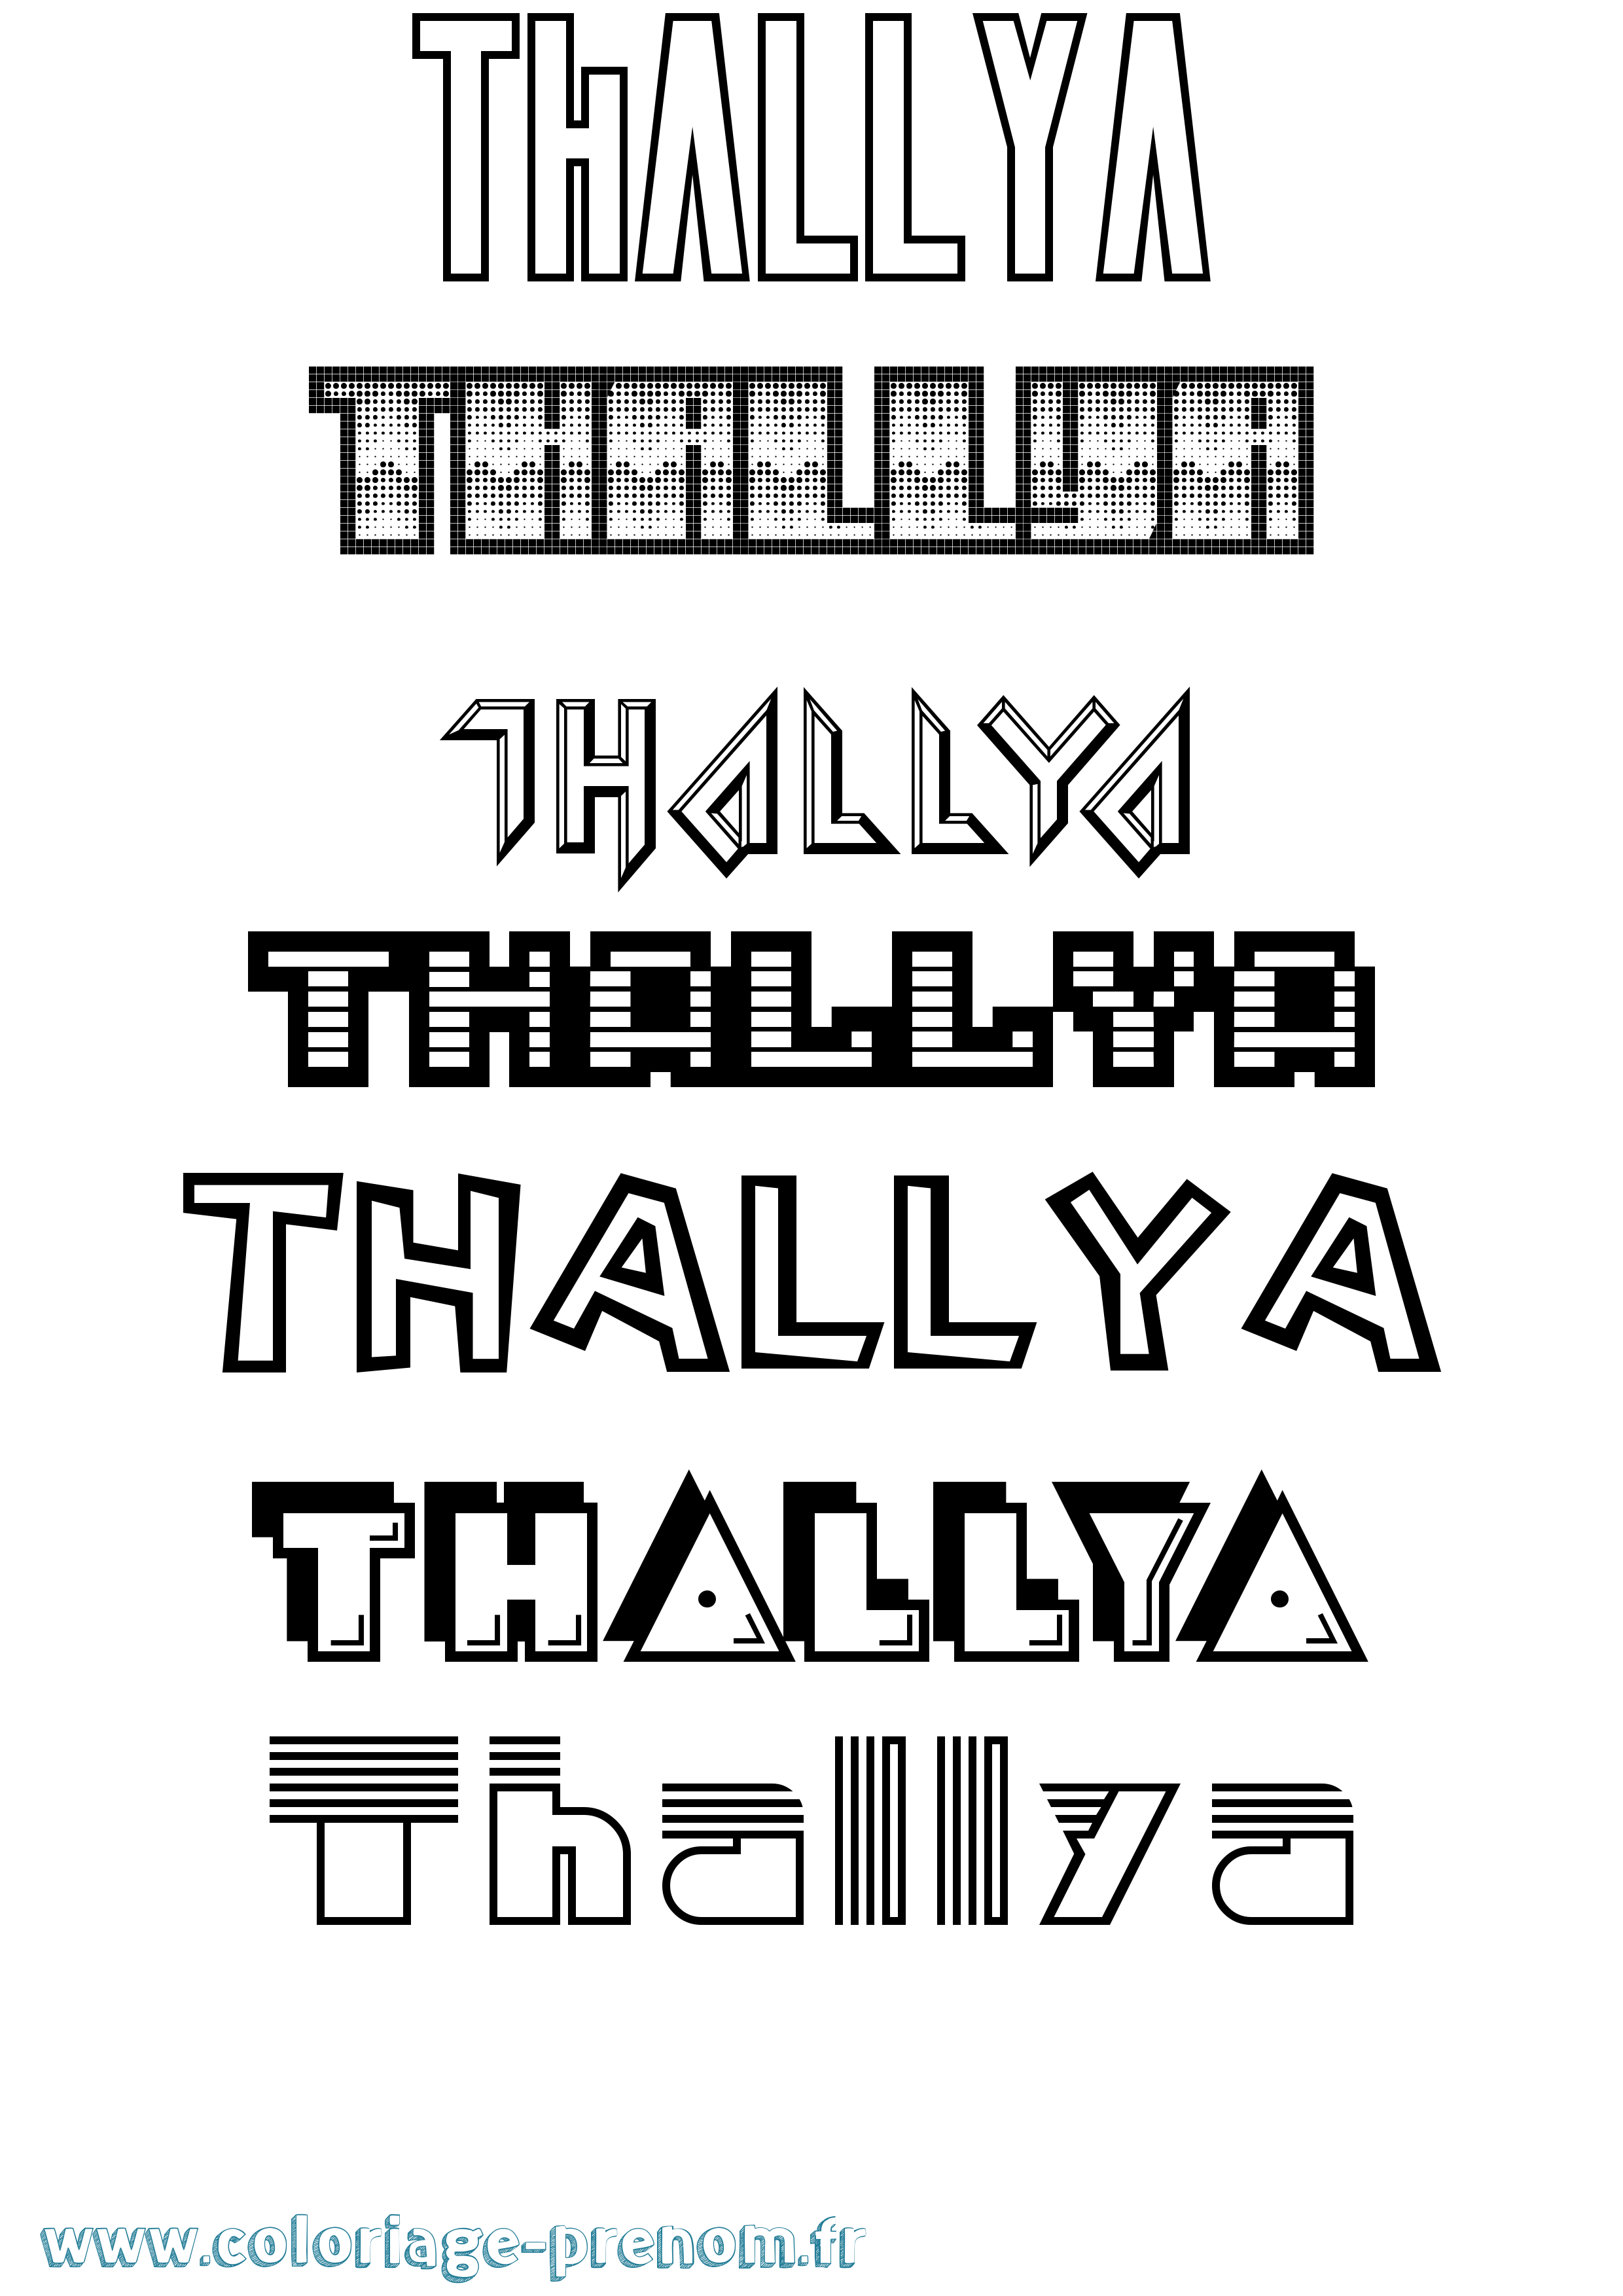 Coloriage prénom Thallya Jeux Vidéos